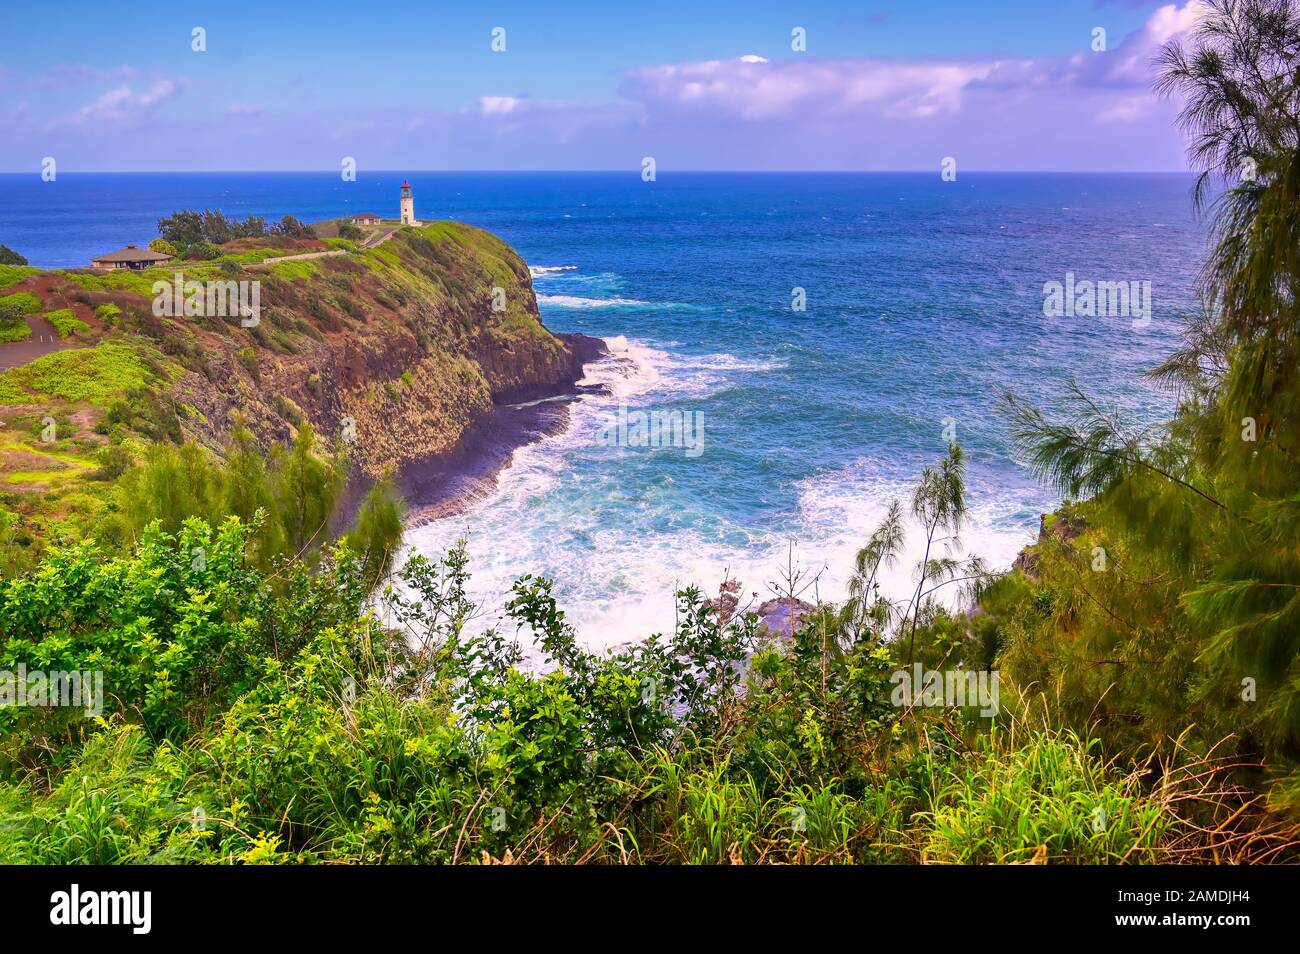 The Kilauea Lighthouse on the coast of Kauai, Hawaii. Stock Photo